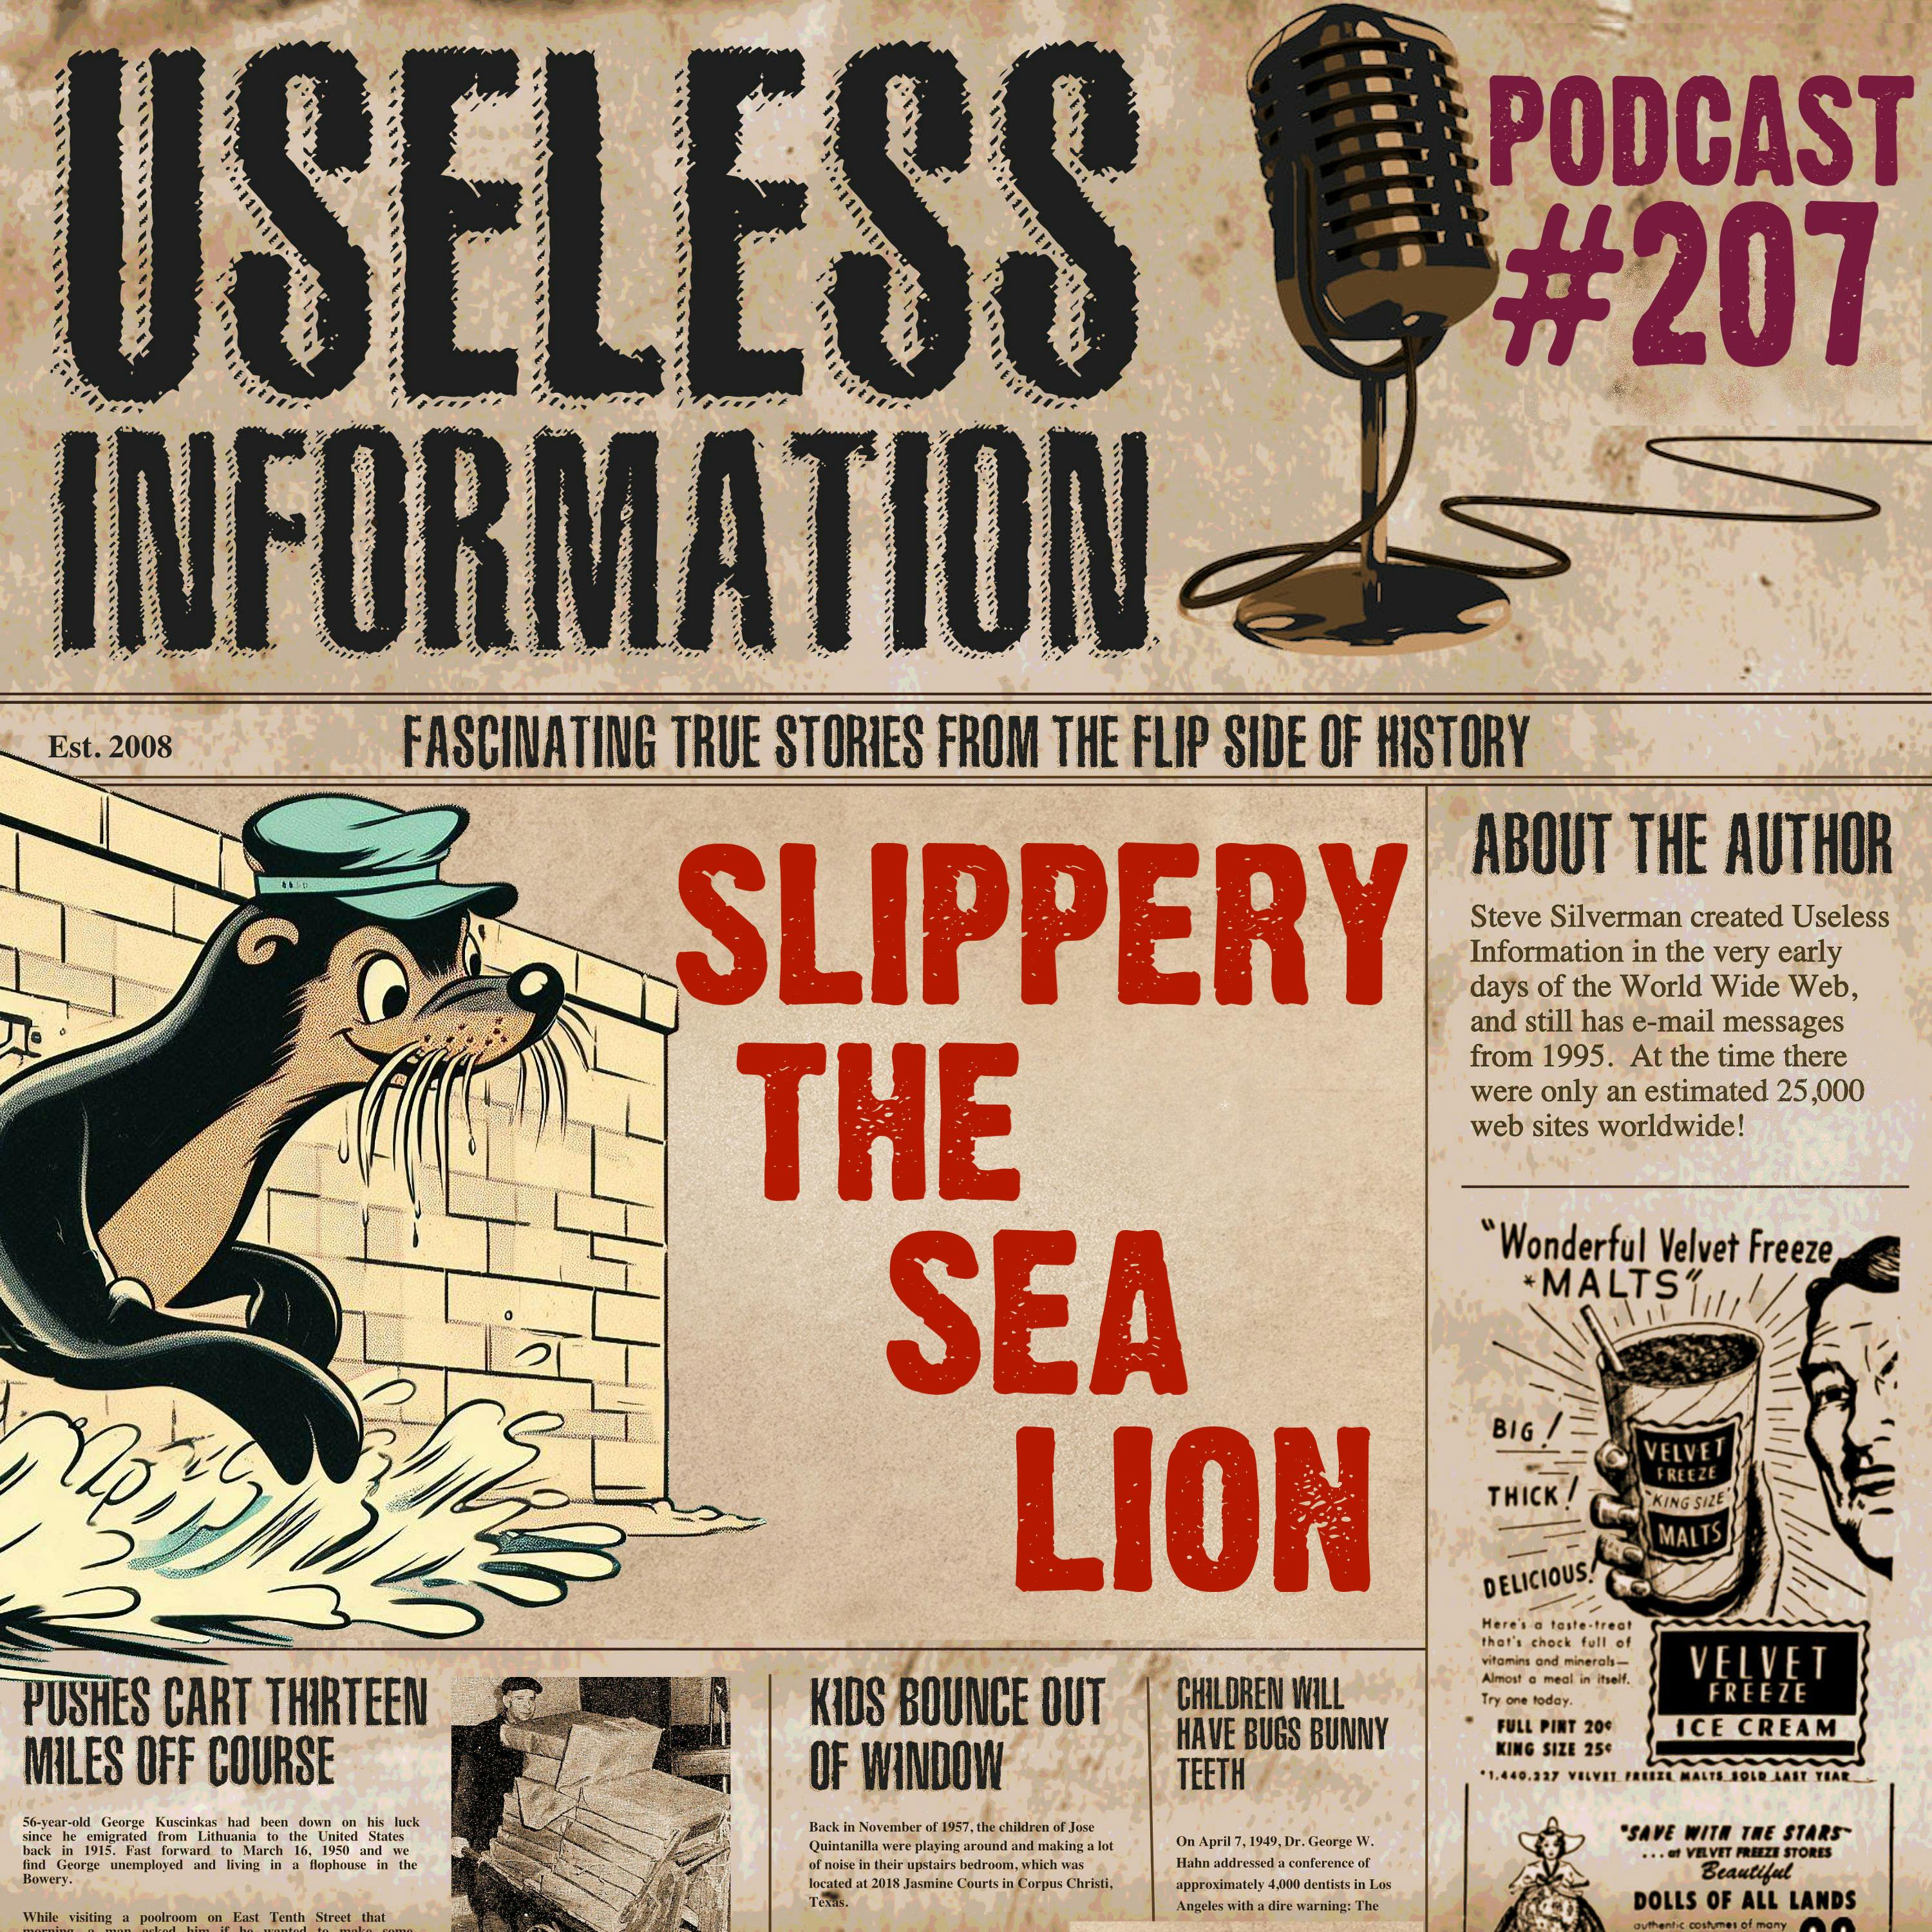 Slippery the Sea Lion - UI Podcast #207